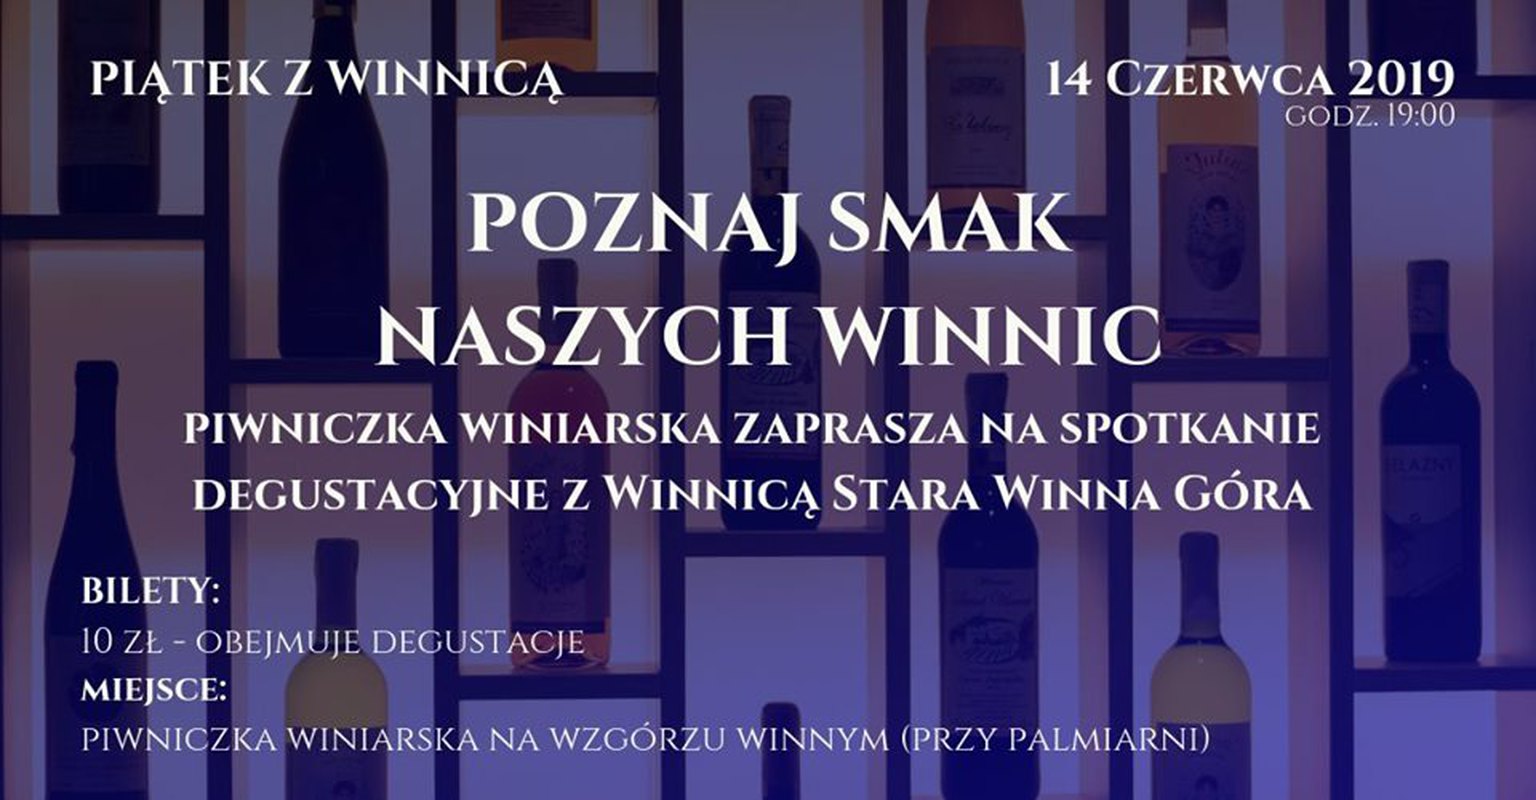 Piątek z Winnicą cz. 19 - Winnica Stara Winna Góra